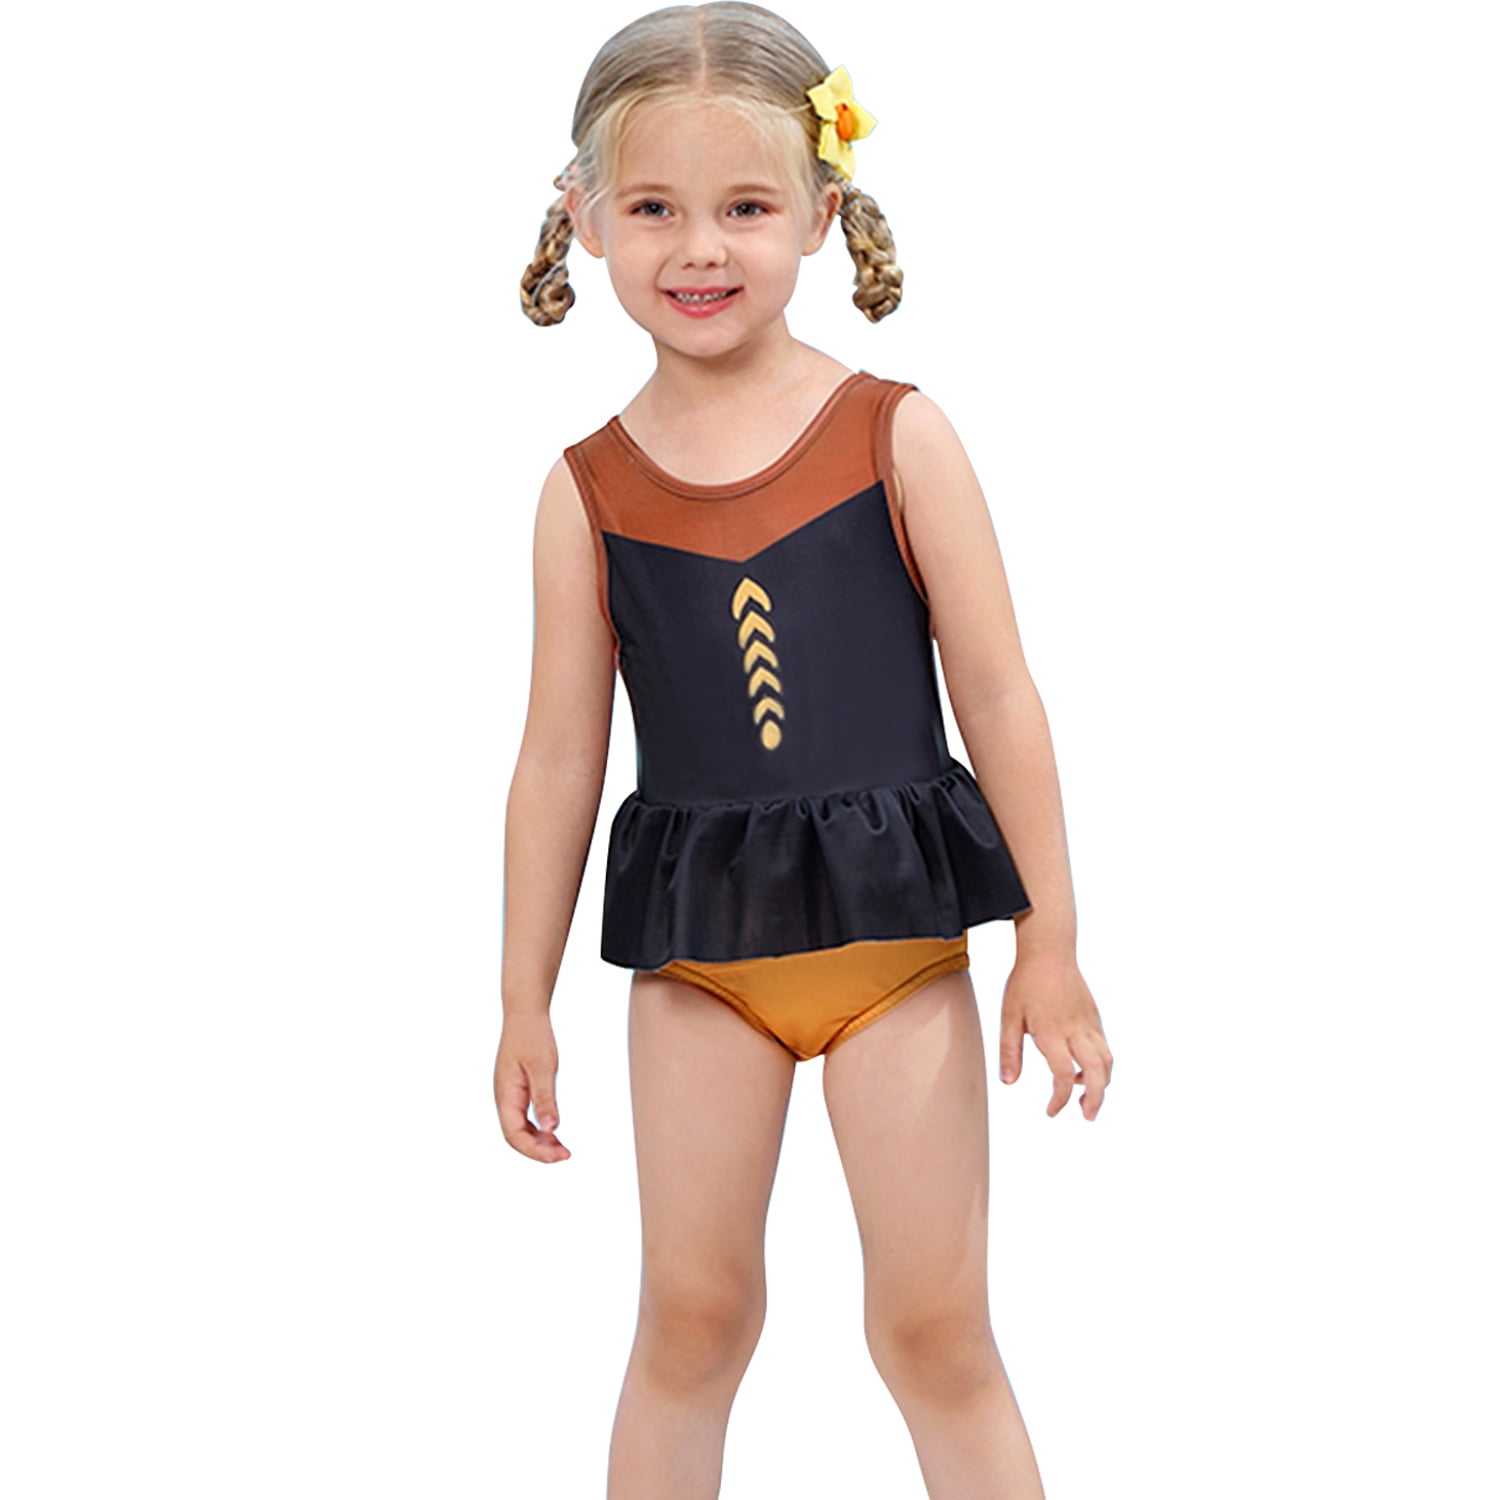 childrens character surf suit swimsuit swim costume childrens swimwear age 1-10 